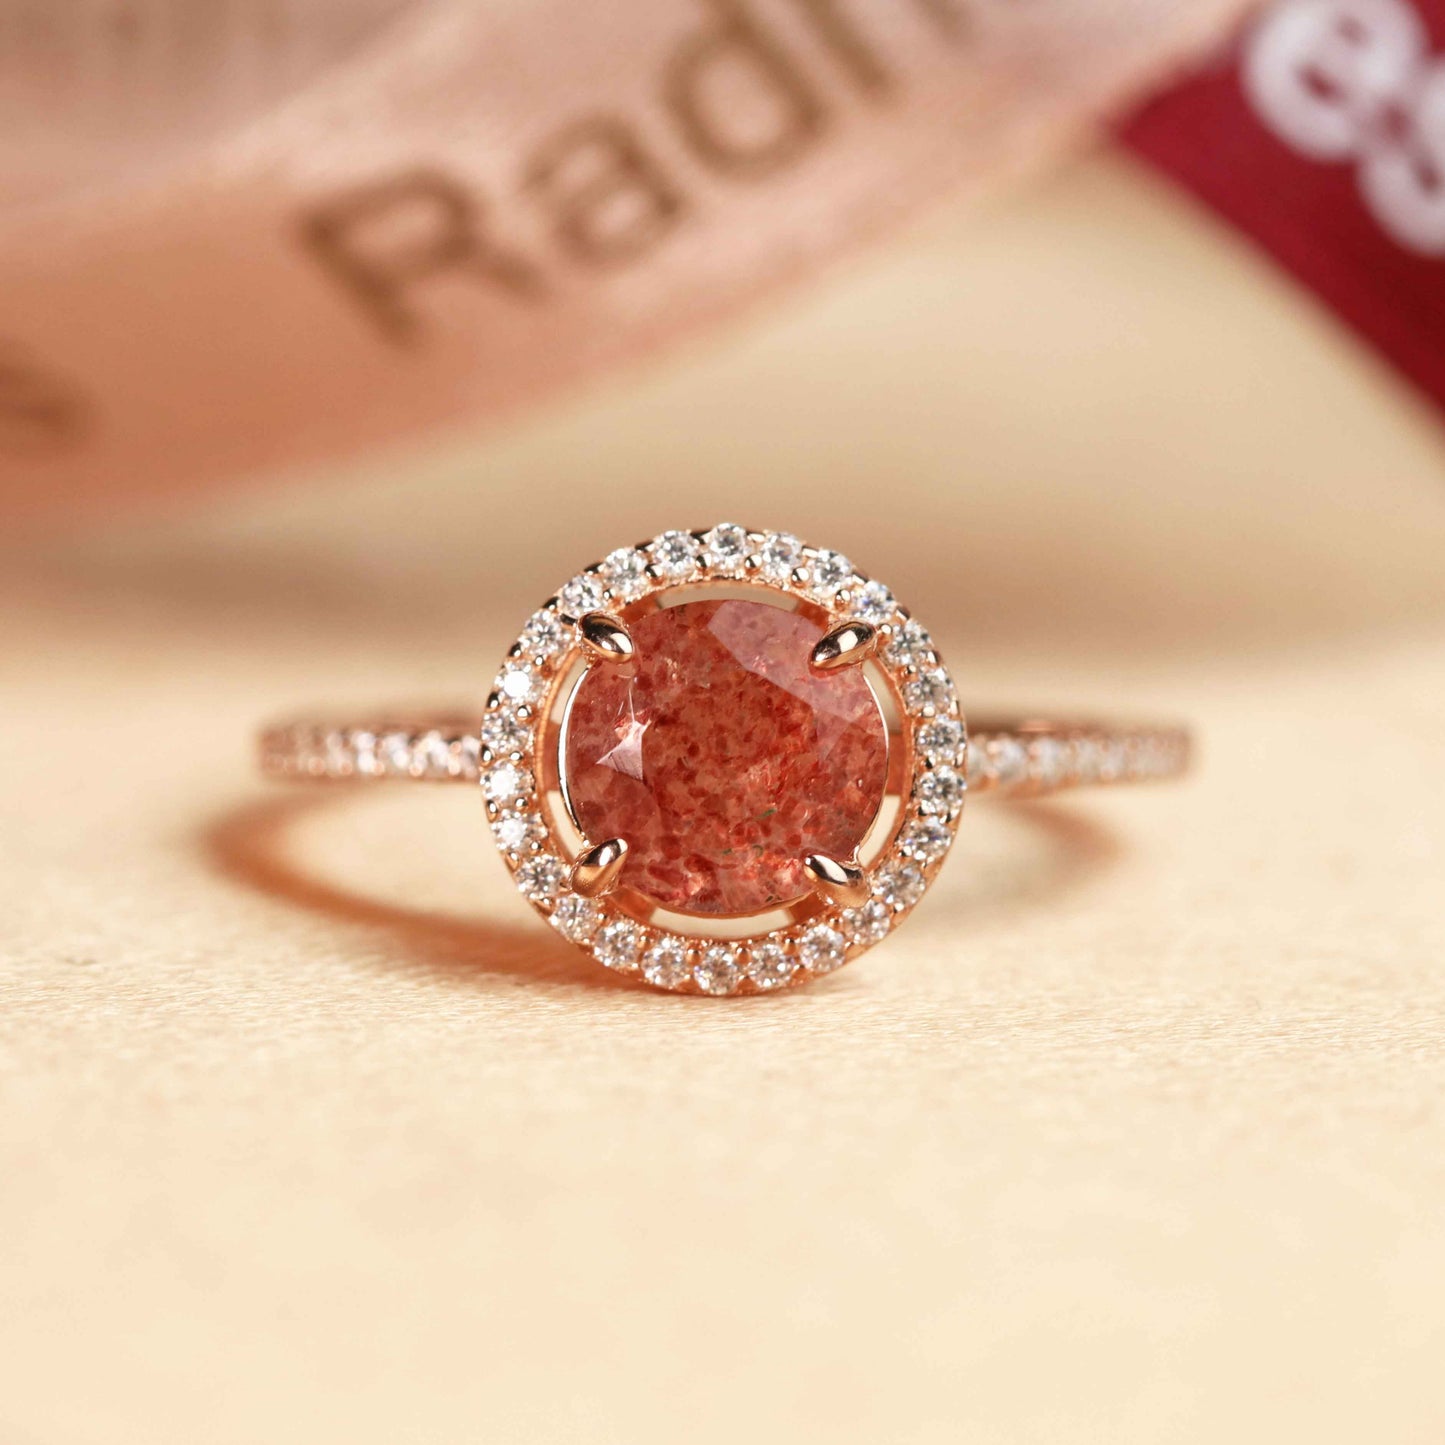 Half-pave 1.25 carat Round Cut Strawberry Quartz and Diamond Halo Bridal Ring in Rose Gold